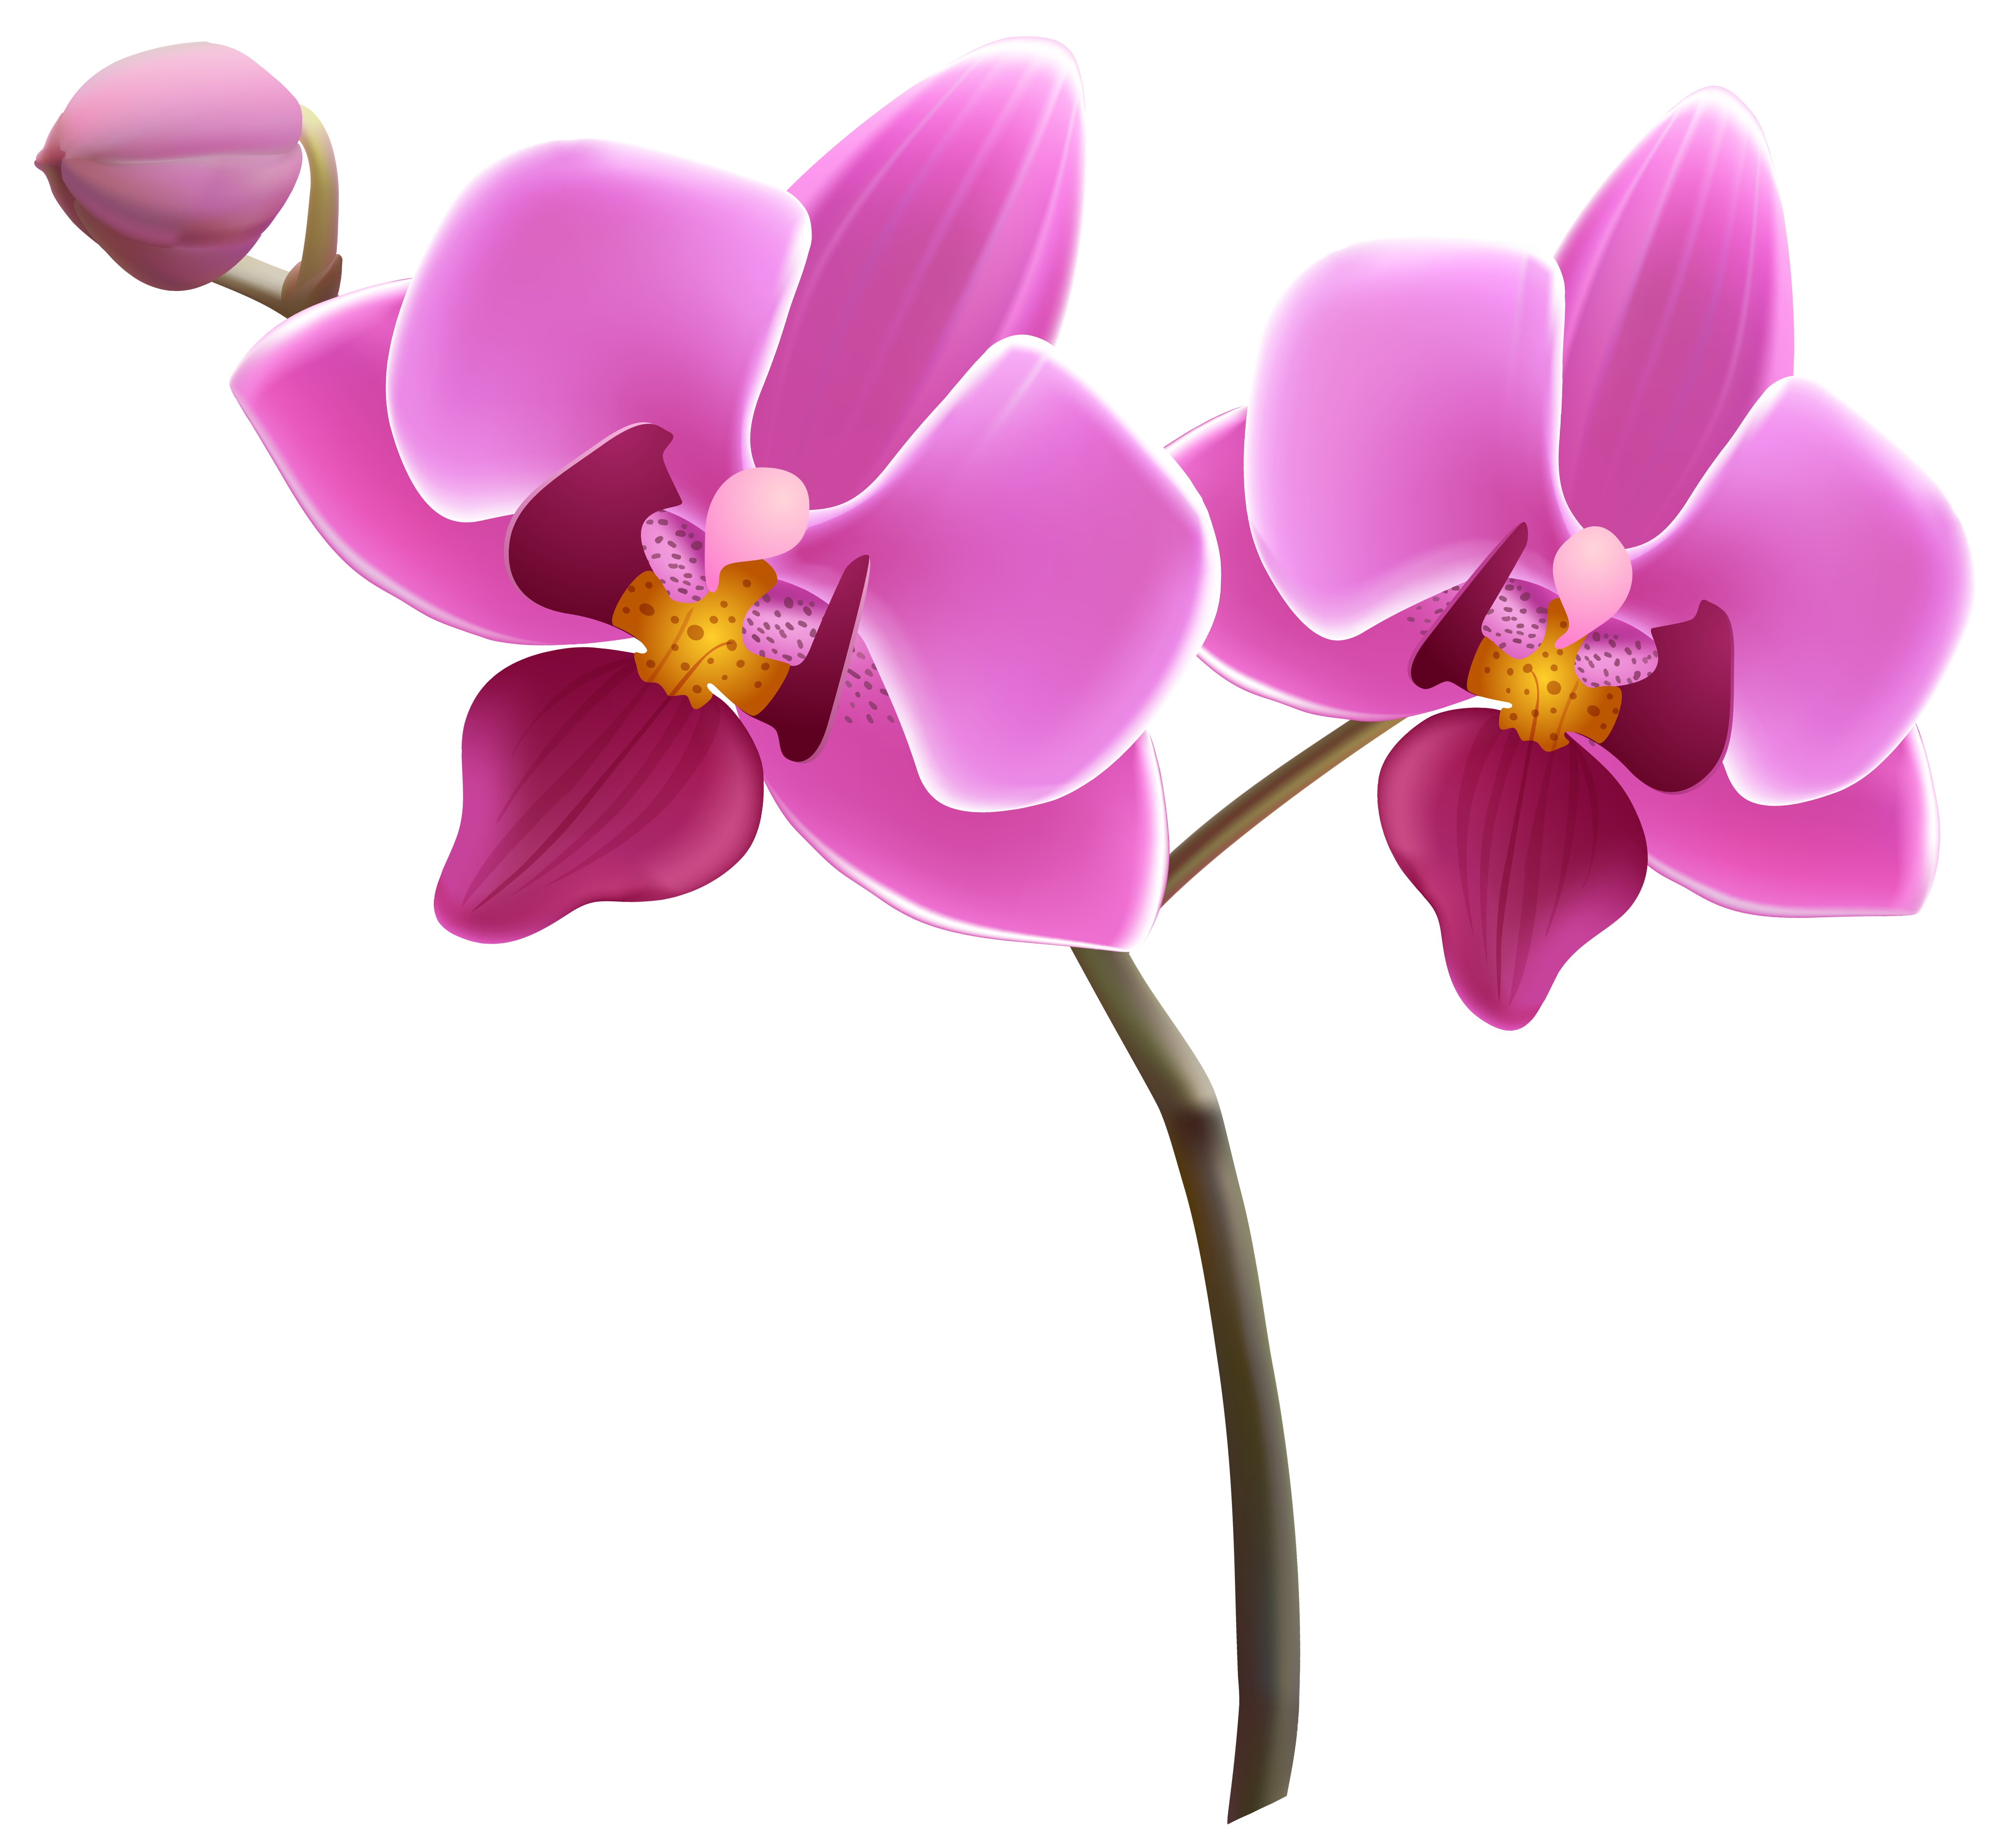 Free Beautiful Purple Orchid 